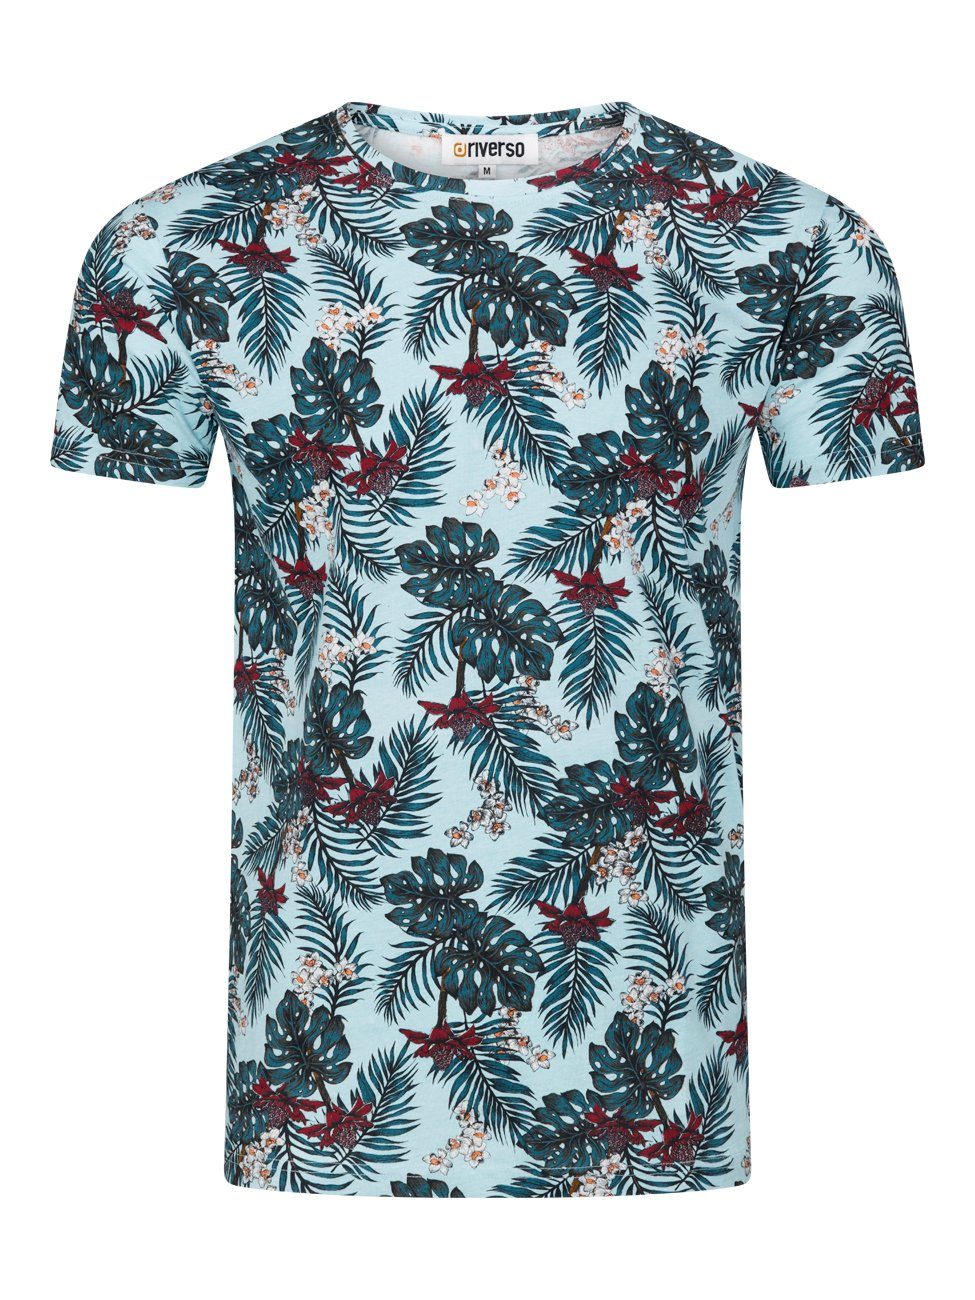 Kurzarm Baumwolle 100% (2-tlg) RIVBill riverso mit Fit 2 Farbmix T-Shirt Printshirt Regular aus Rundhalsausschnitt Herren Hawaiishirt